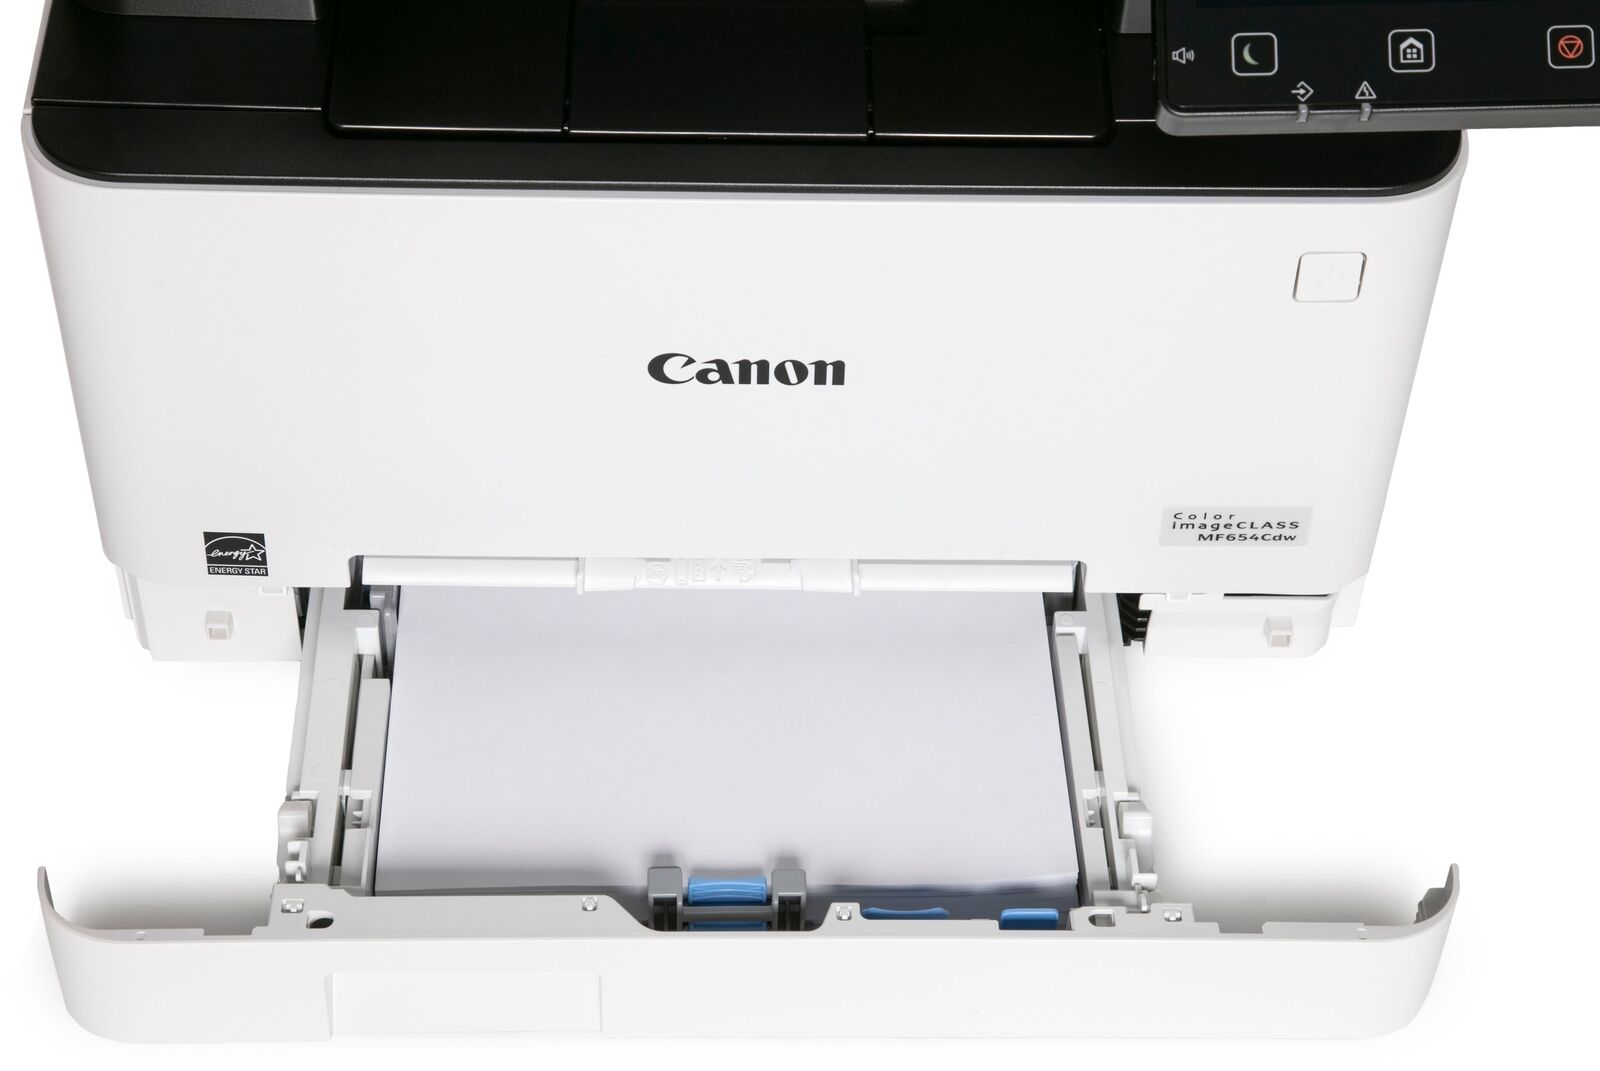 Canon - imageCLASS MF654Cdw Wireless Color All-In-One Laser Printer - White